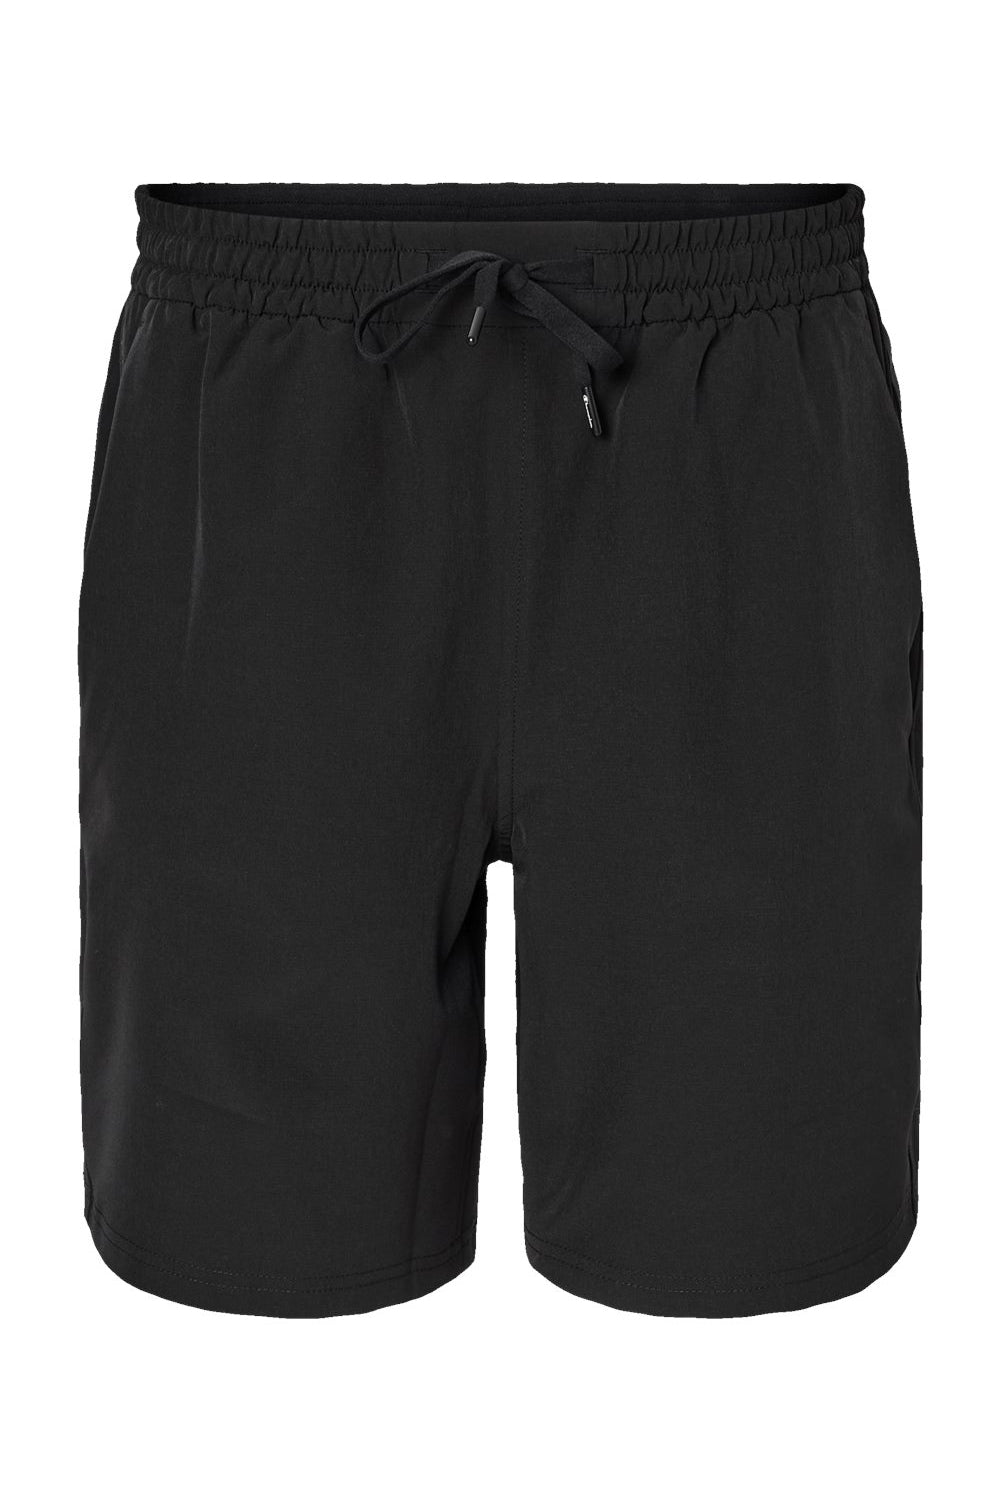 Champion CHP150 Mens Woven City Sport Shorts w/ Pockets Black Flat Front